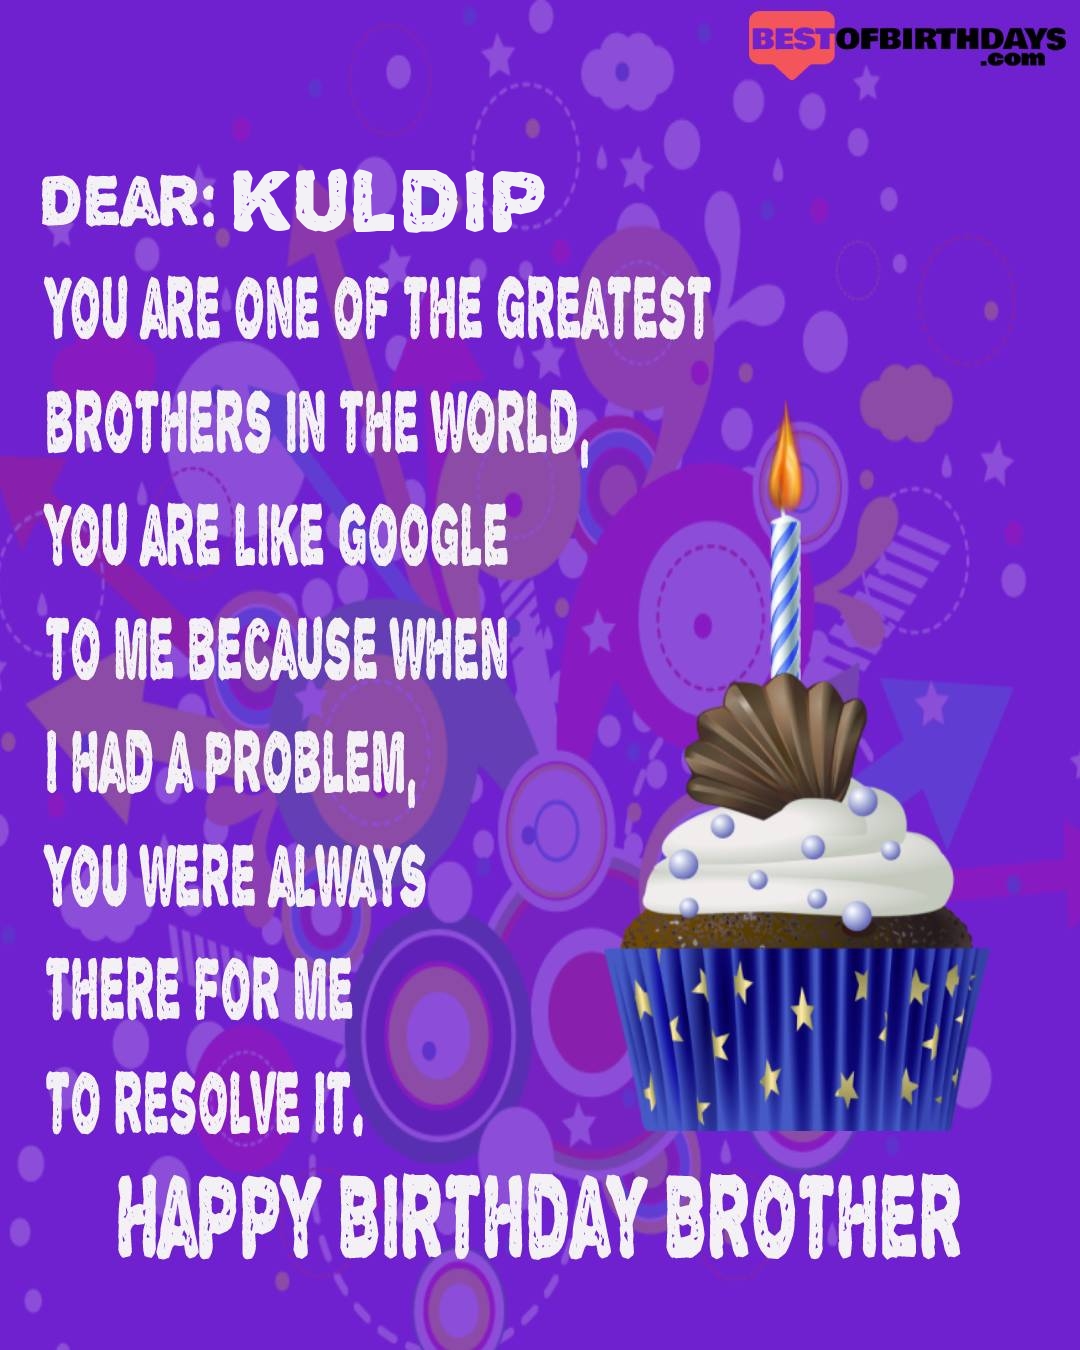 Happy birthday kuldip bhai brother bro